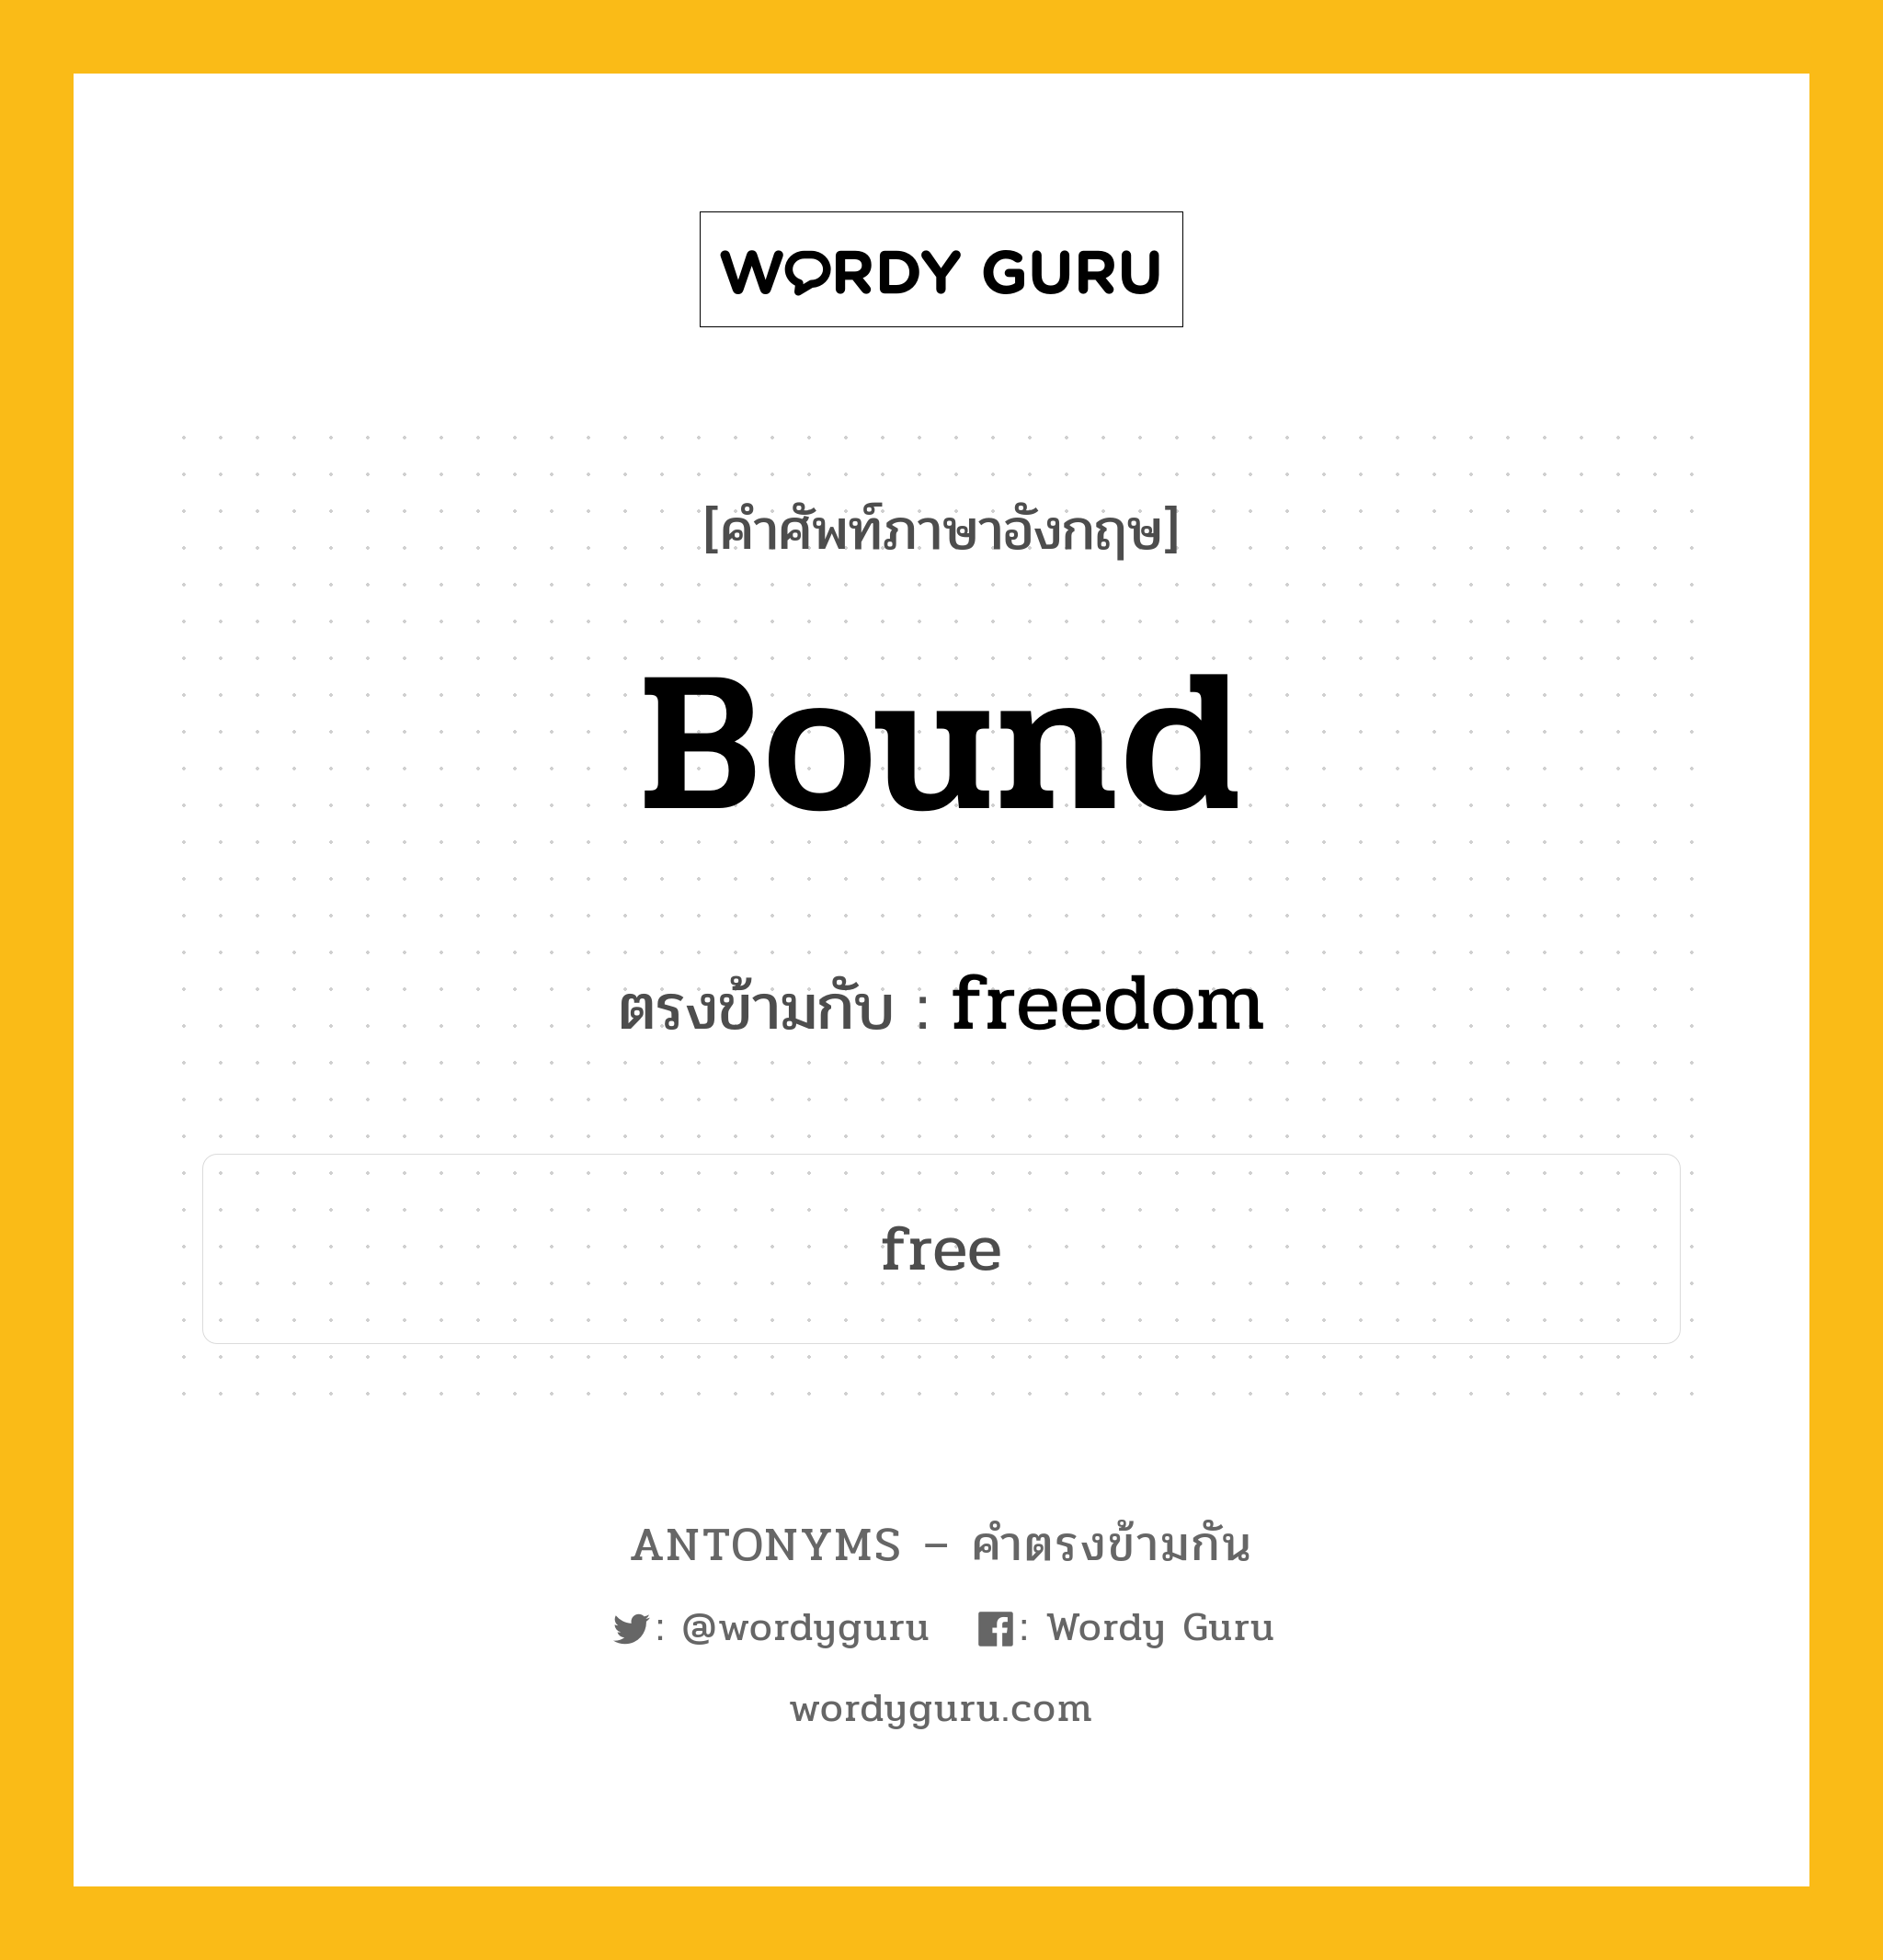 bound เป็นคำตรงข้ามกับคำไหนบ้าง?, คำศัพท์ภาษาอังกฤษ bound ตรงข้ามกับ freedom หมวด freedom